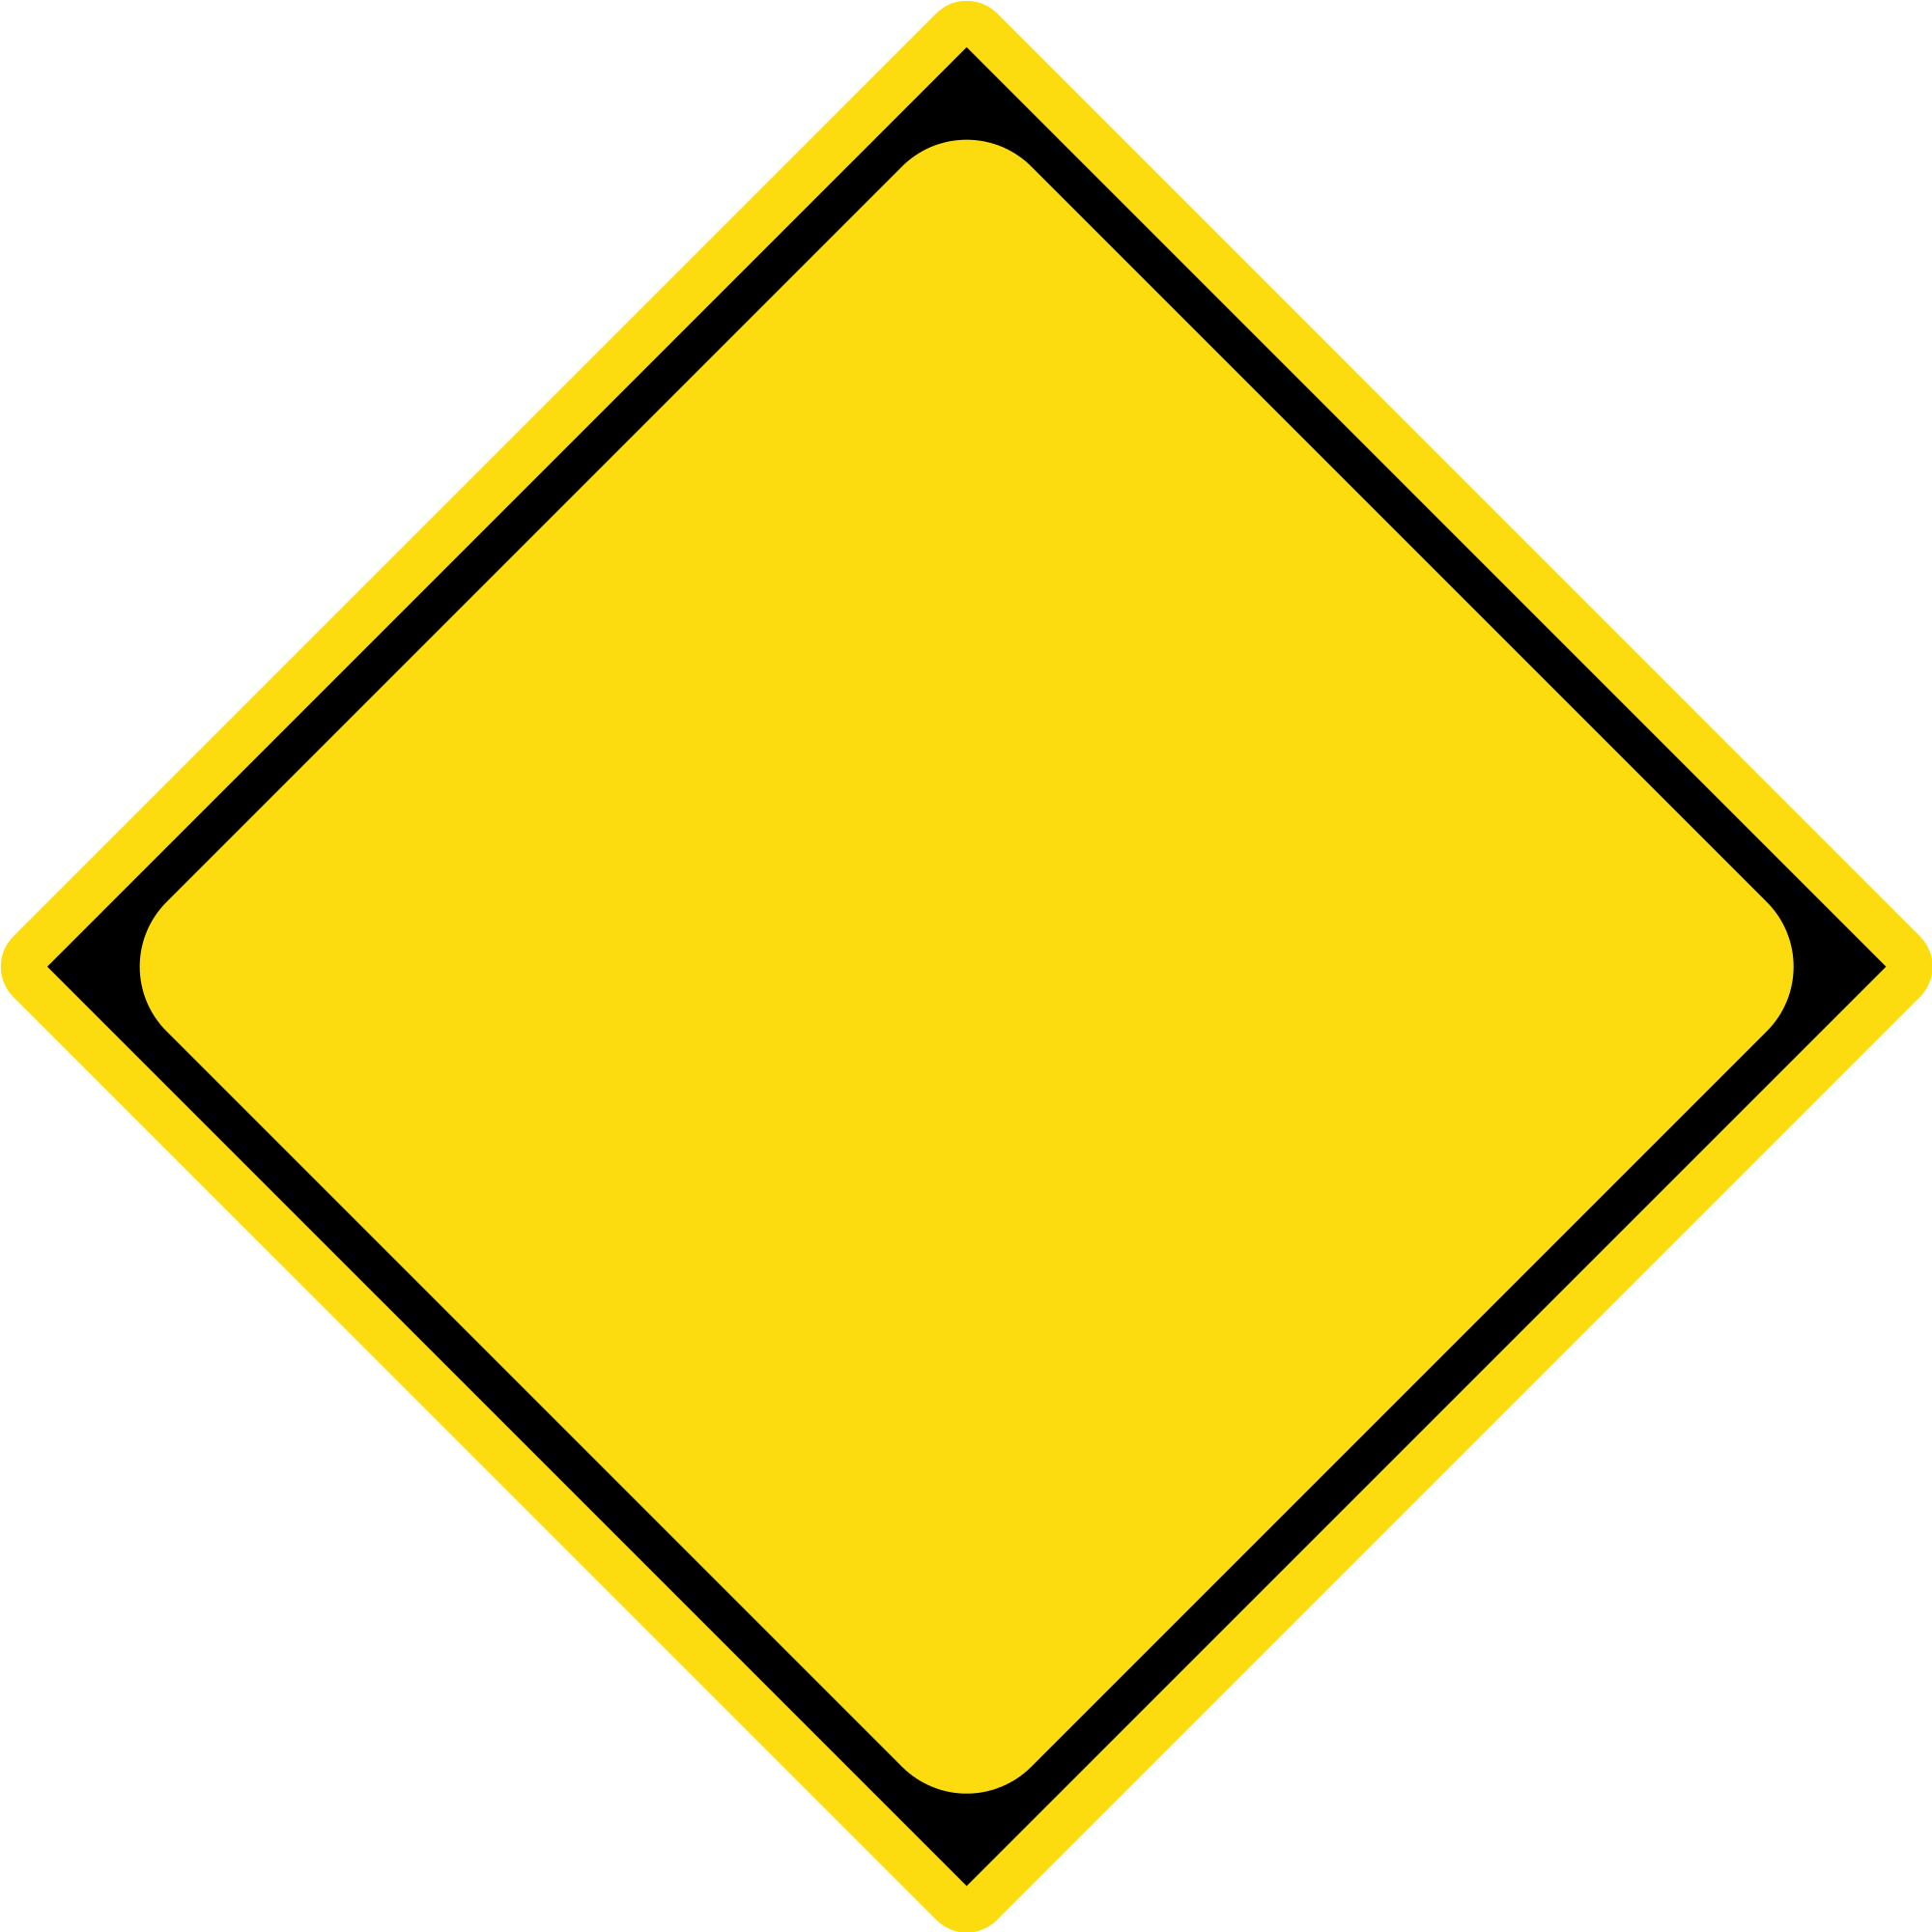 File:Japanese Road warning sign template.svg